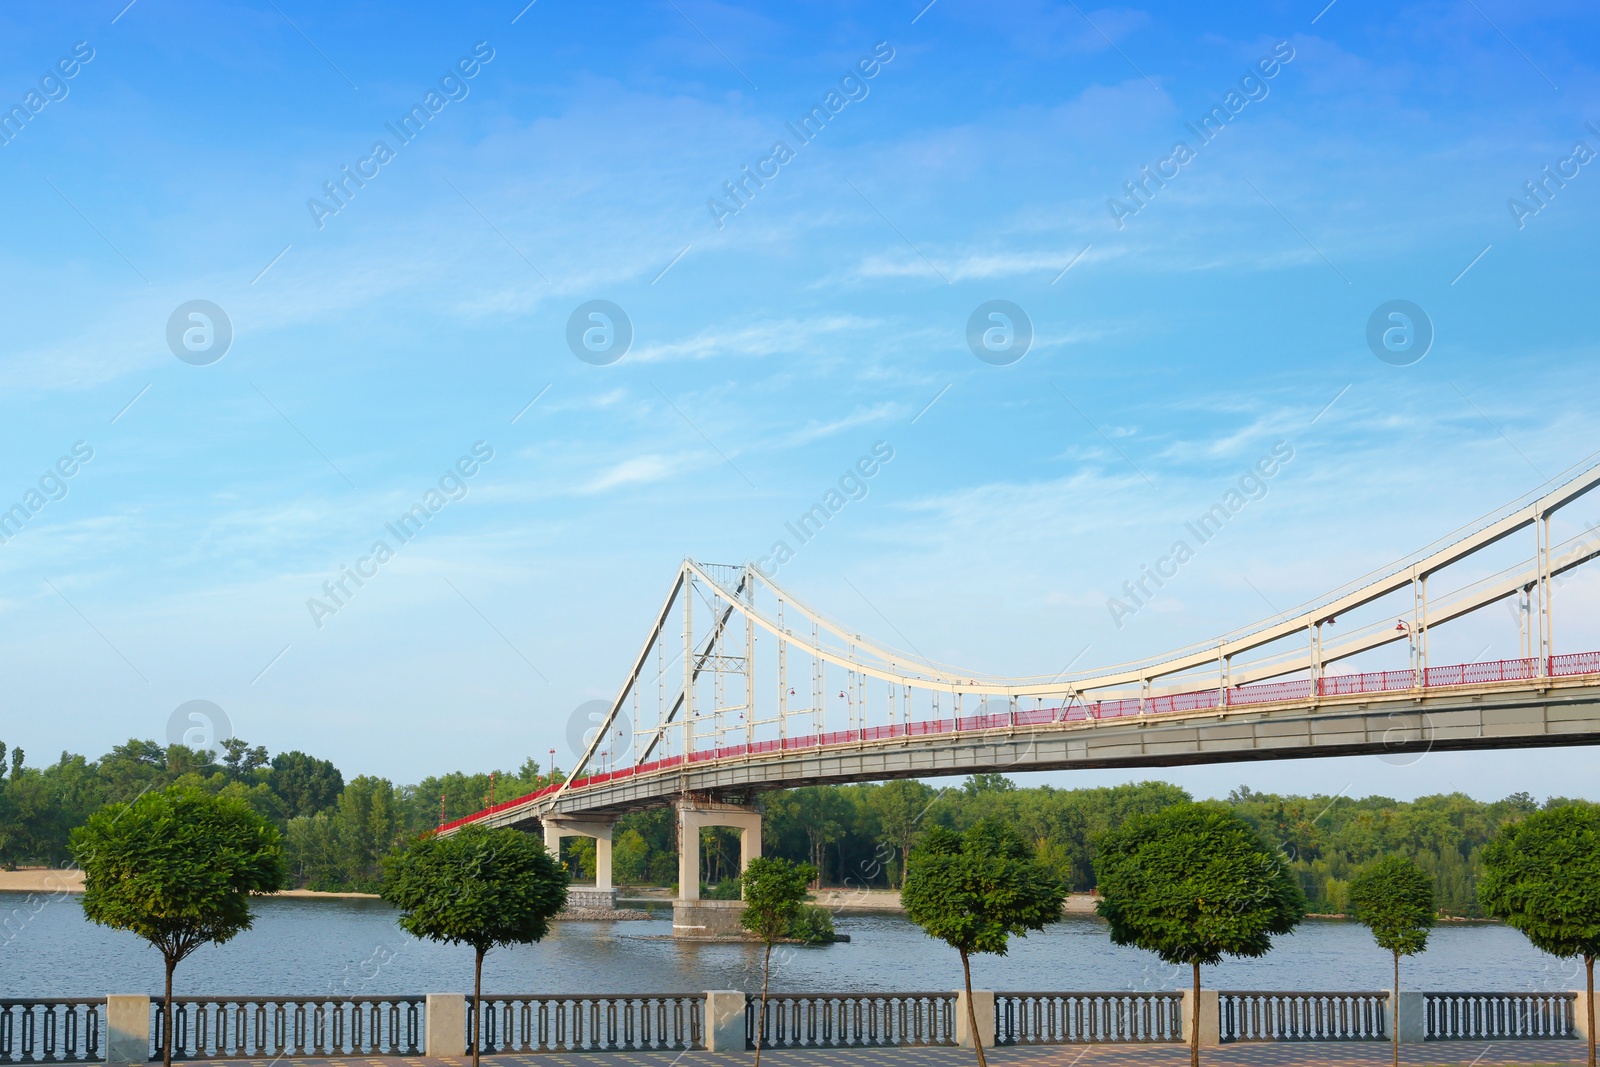 Photo of KYIV, UKRAINE - AUGUST 11, 2022: Beautiful cityscape with pedestrian Park bridge over Dnipro river